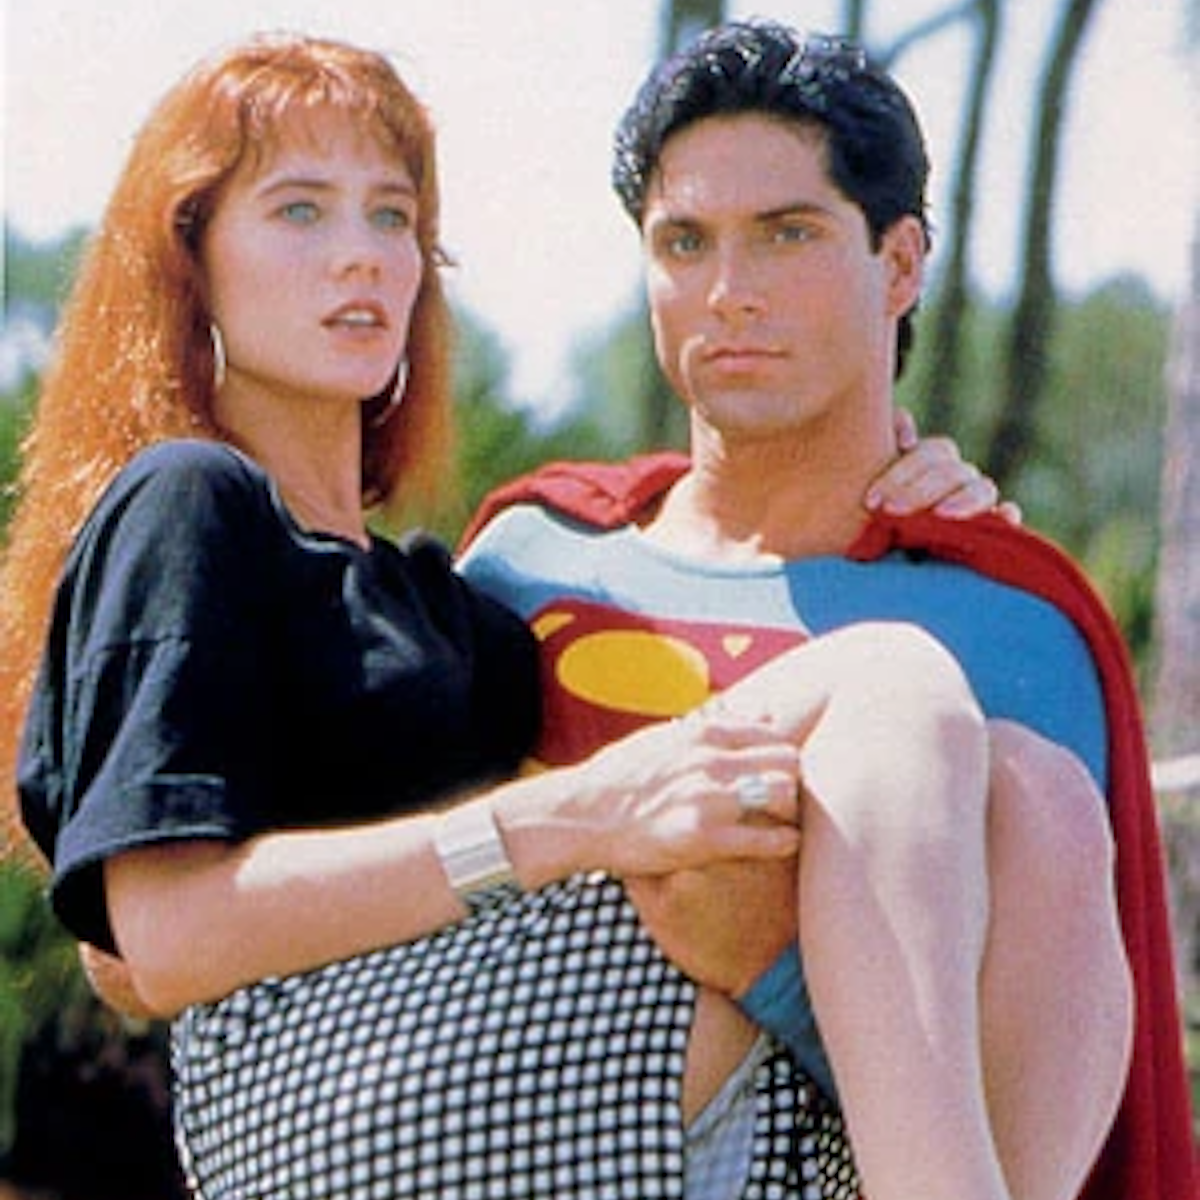 Stacy Haiduk as Lana Lane on Superboy, 1980s